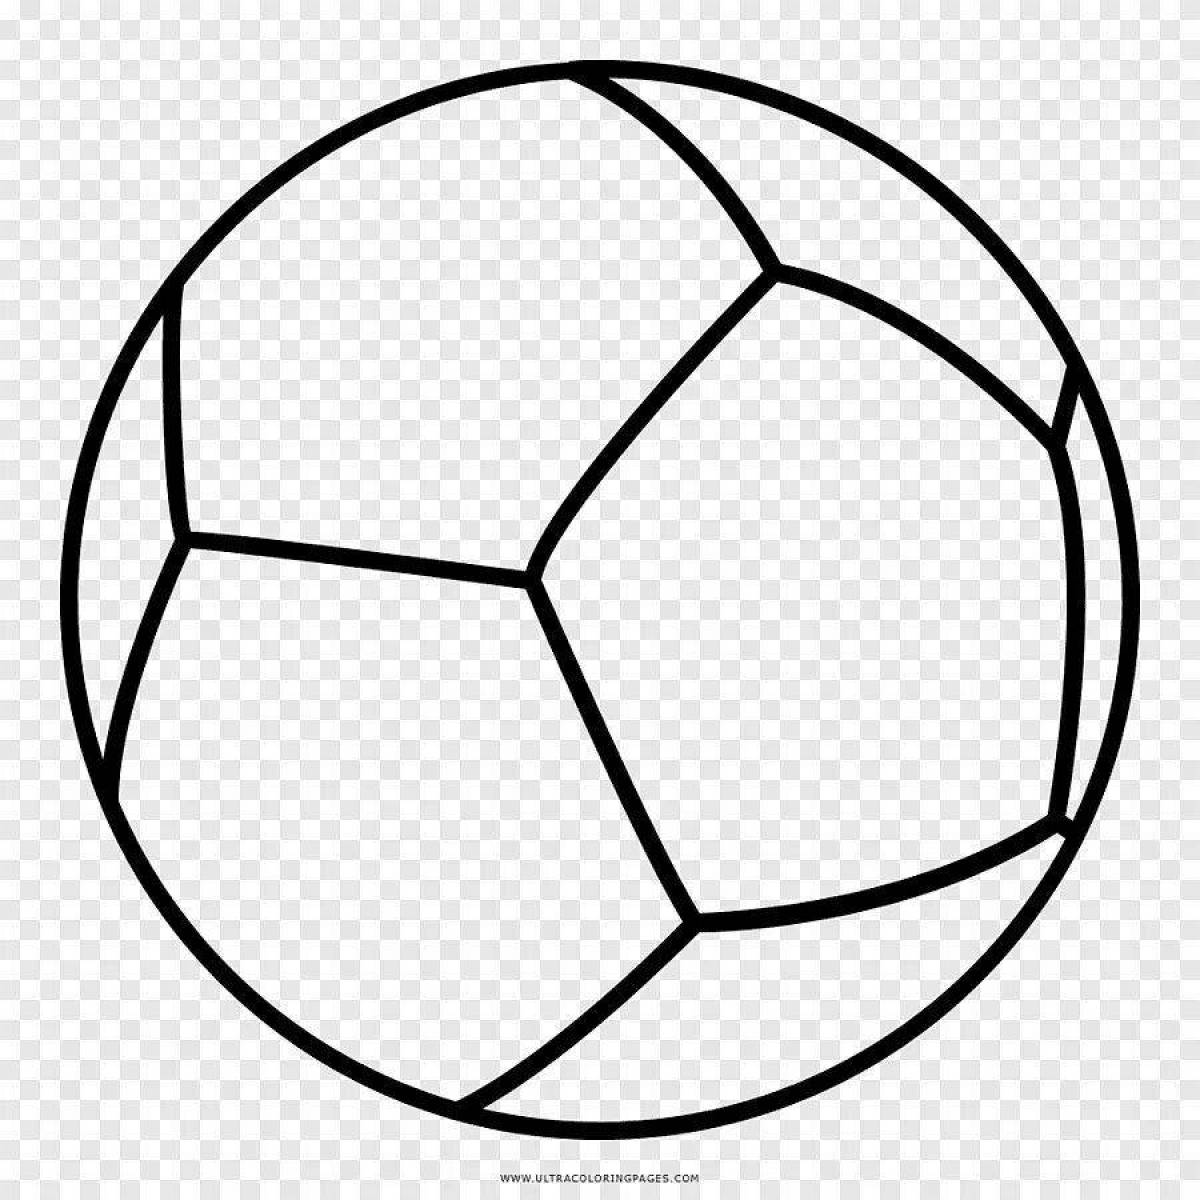 Innovative soccer ball coloring for kids